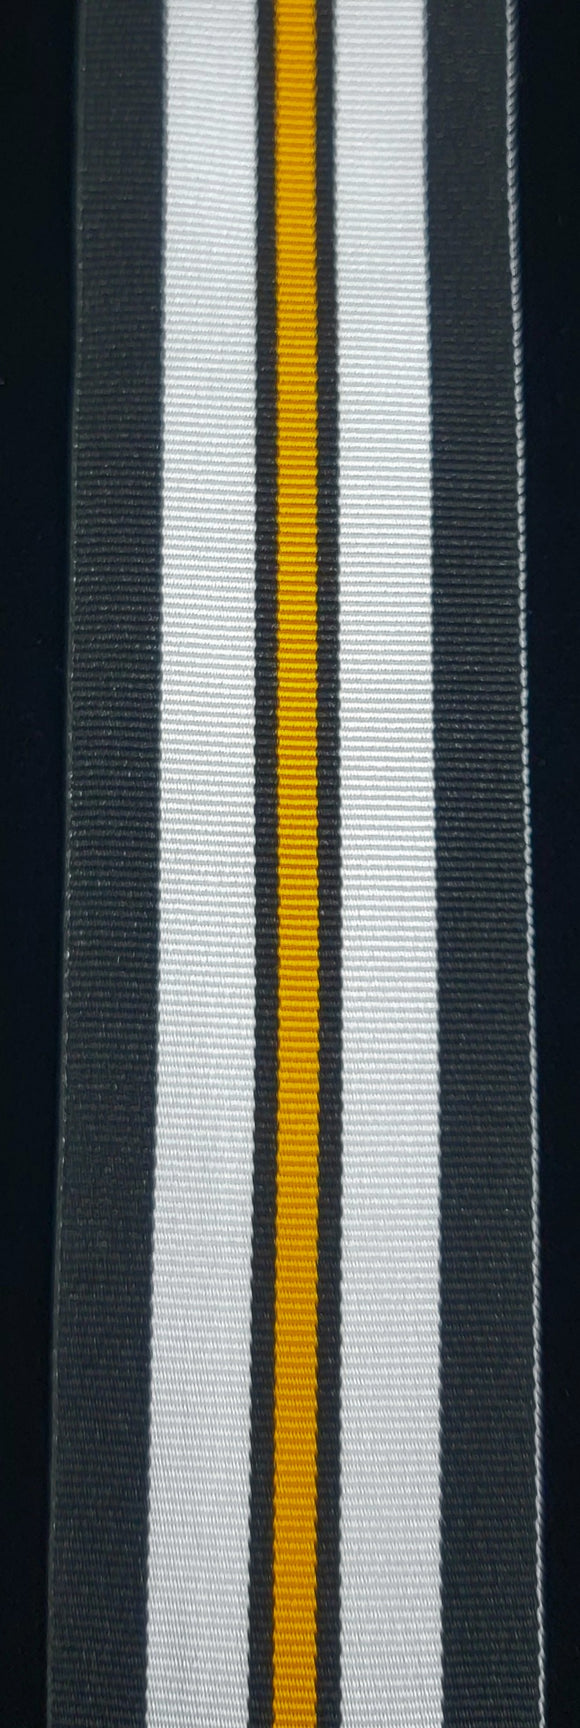 Ribbon, St. John Service Medal-ULS Extension 50 Years